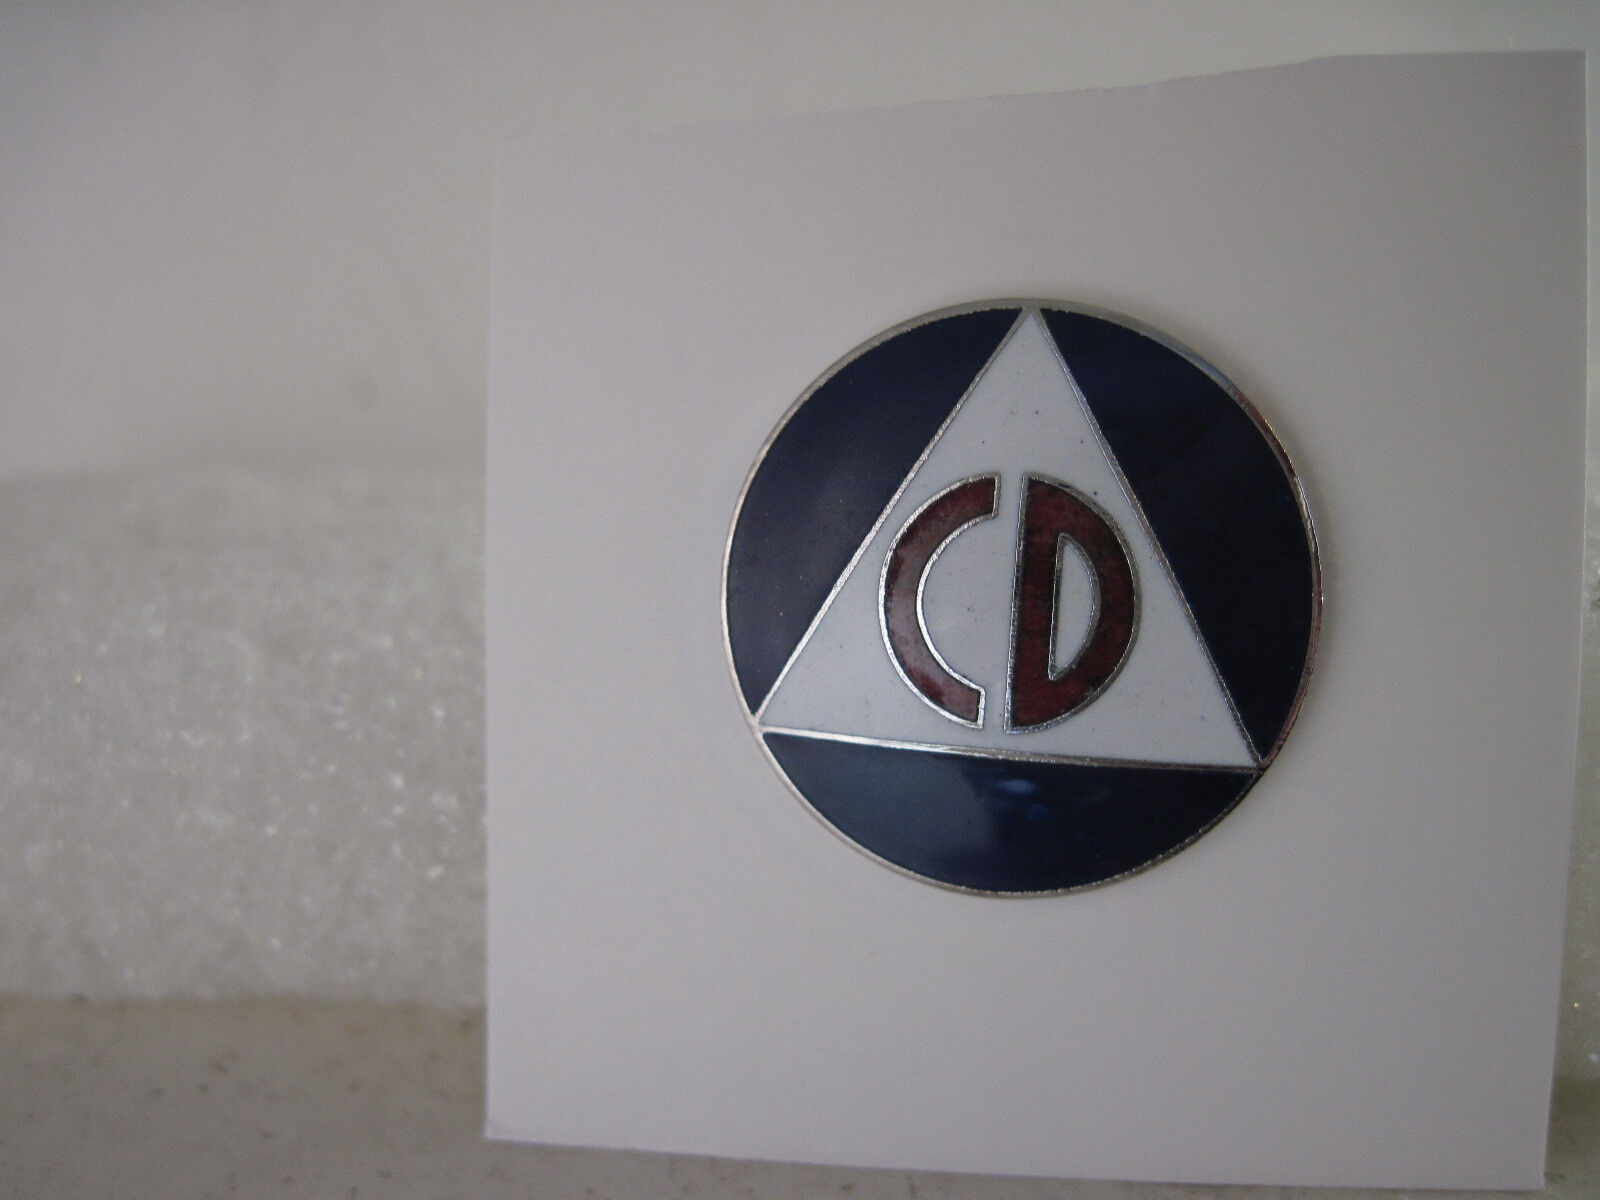 19??  CD civil defense  vintage style  logo   pin  